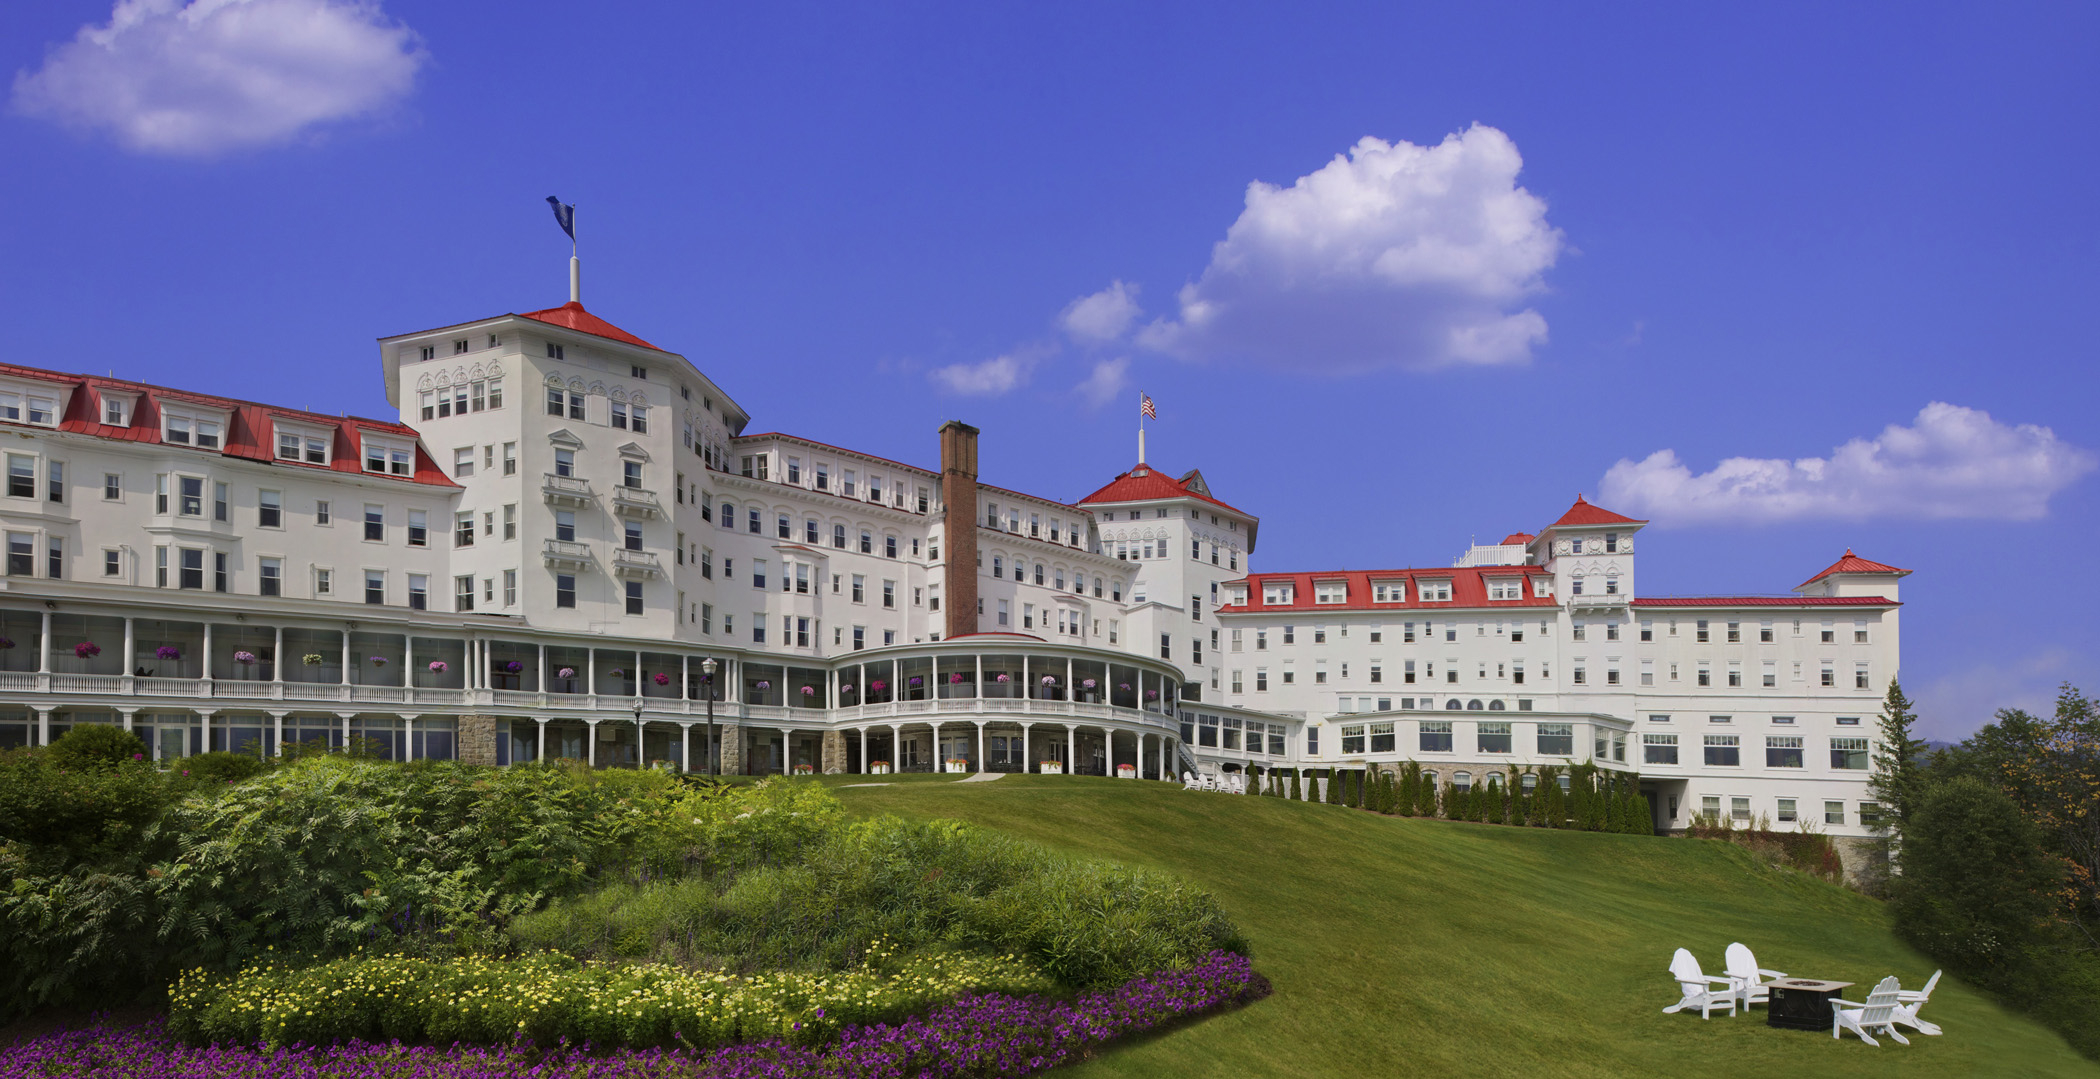 Omni Mt. Washington Hotel, Bretton Woods, NH. Courtesy of Omni Mount Washington Resort.